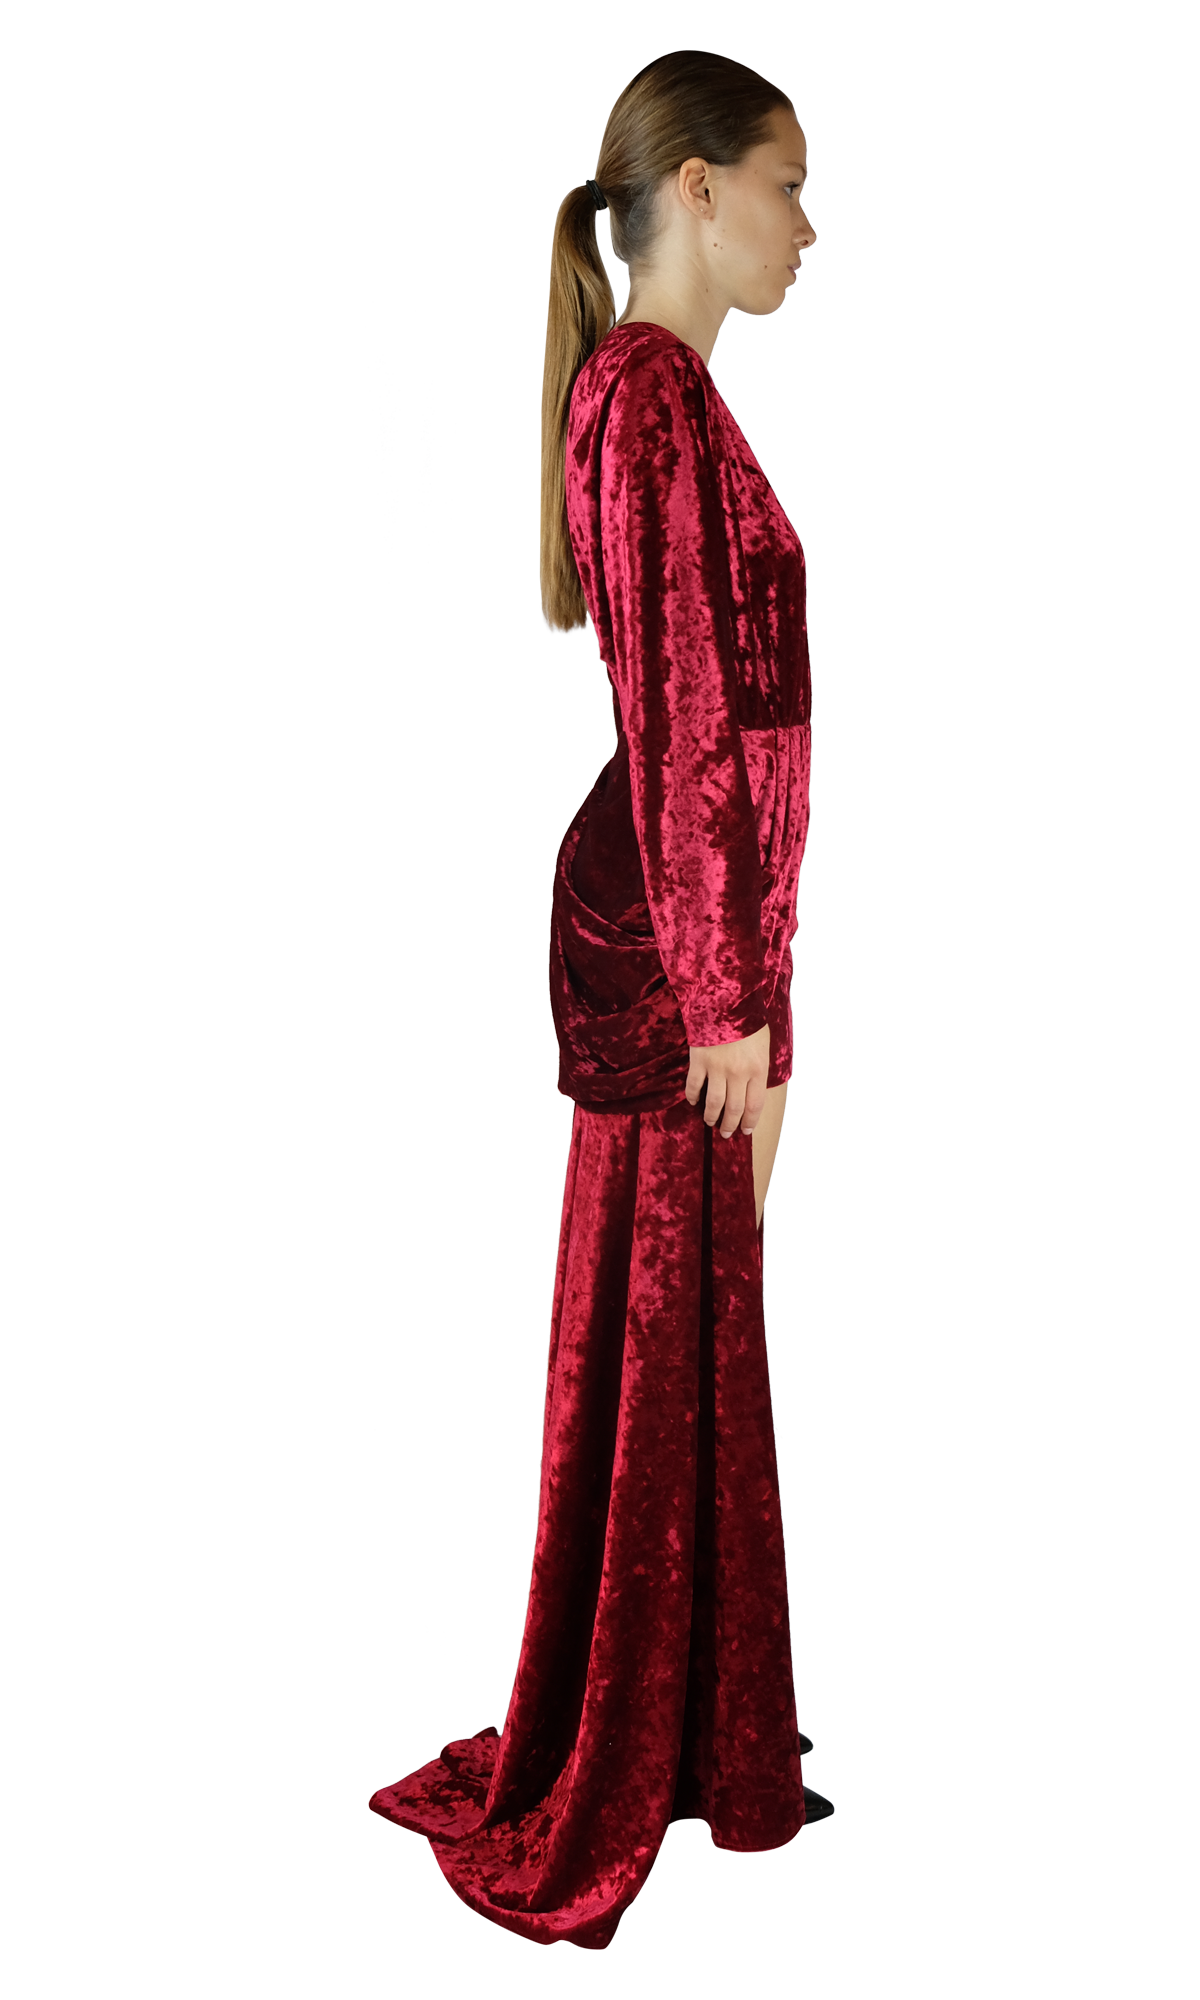 Red Carpet Dress